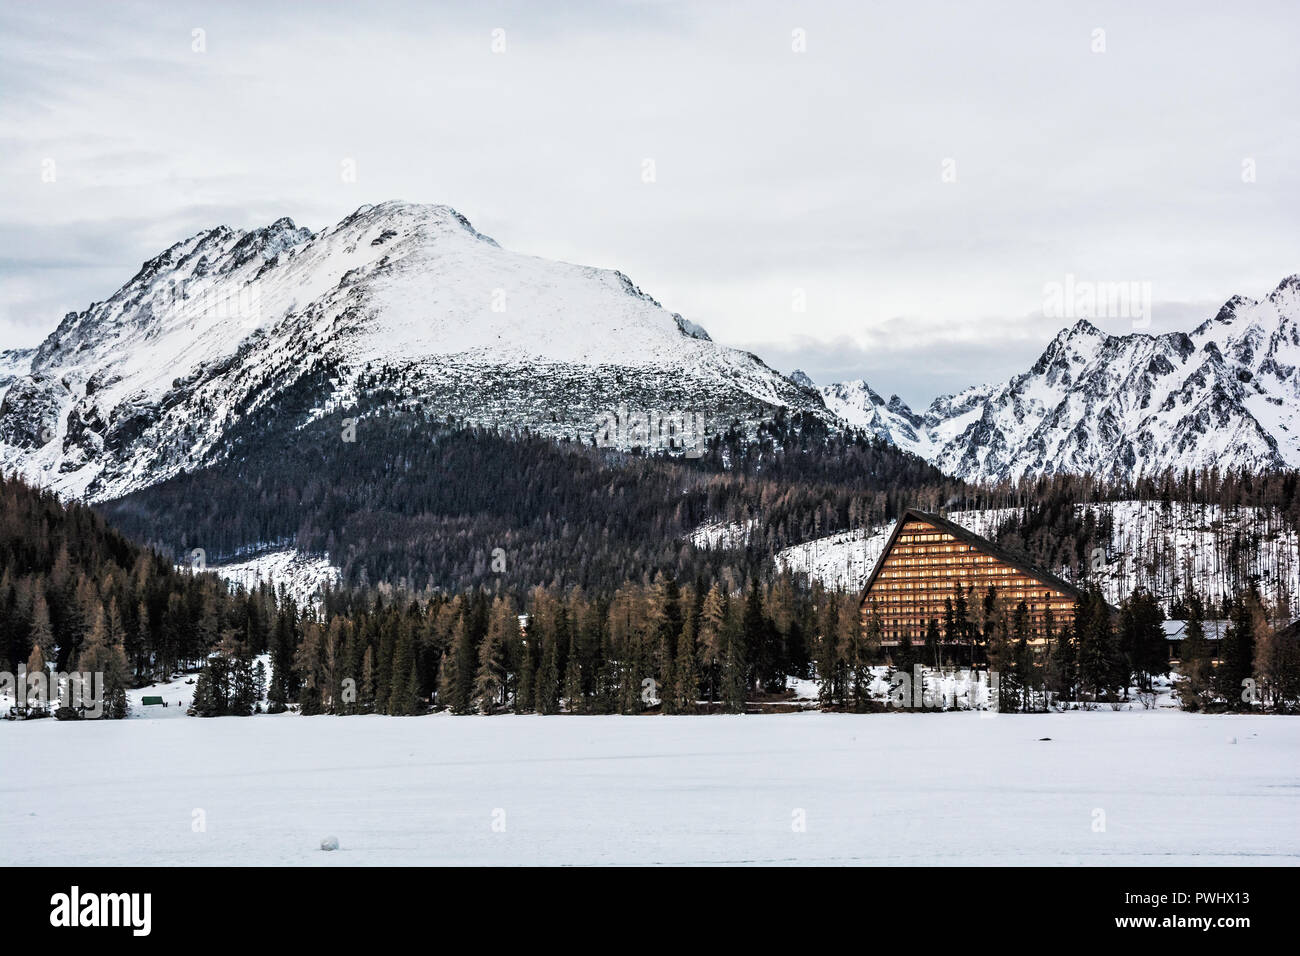 Solisko Peak und Hotel Patria in Strbske Pleso, Hohe Tatra, Slowakei. Winter Berge. Reiseland. Stockfoto